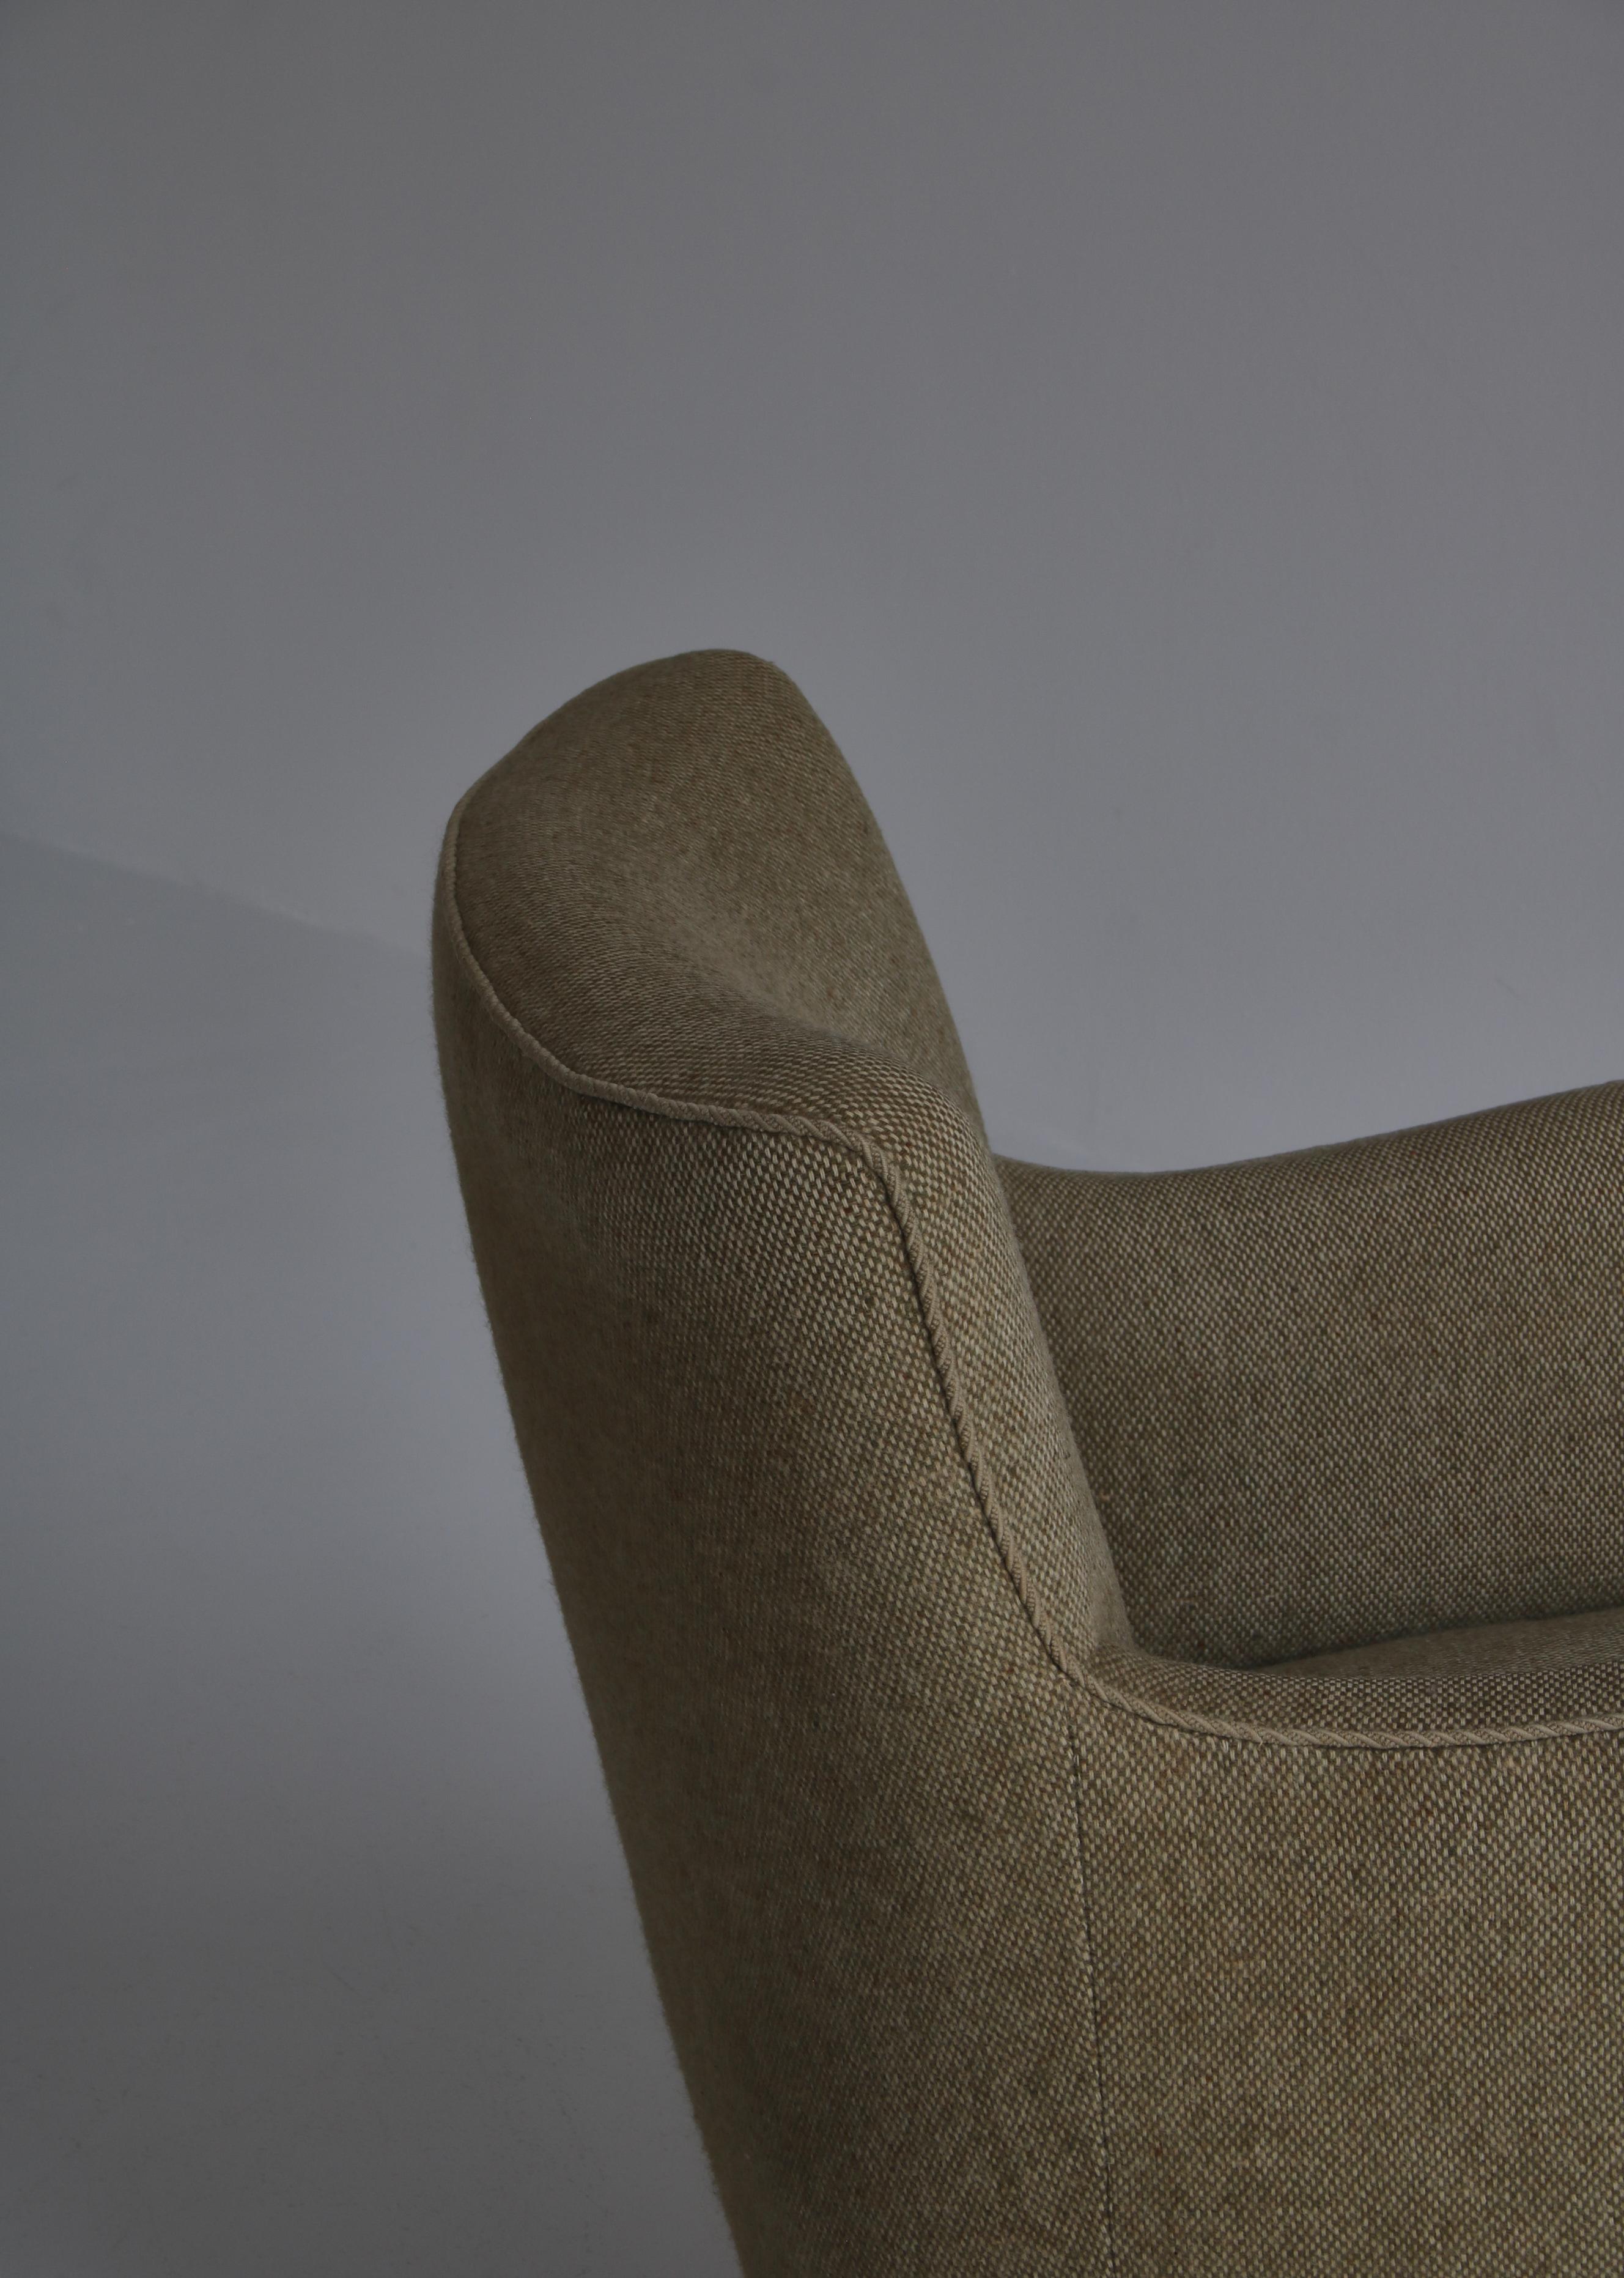 Danish Modern Easy Chair in Beech & Wool Upholstery by Hvidt & Mølgaard, 1950s For Sale 6